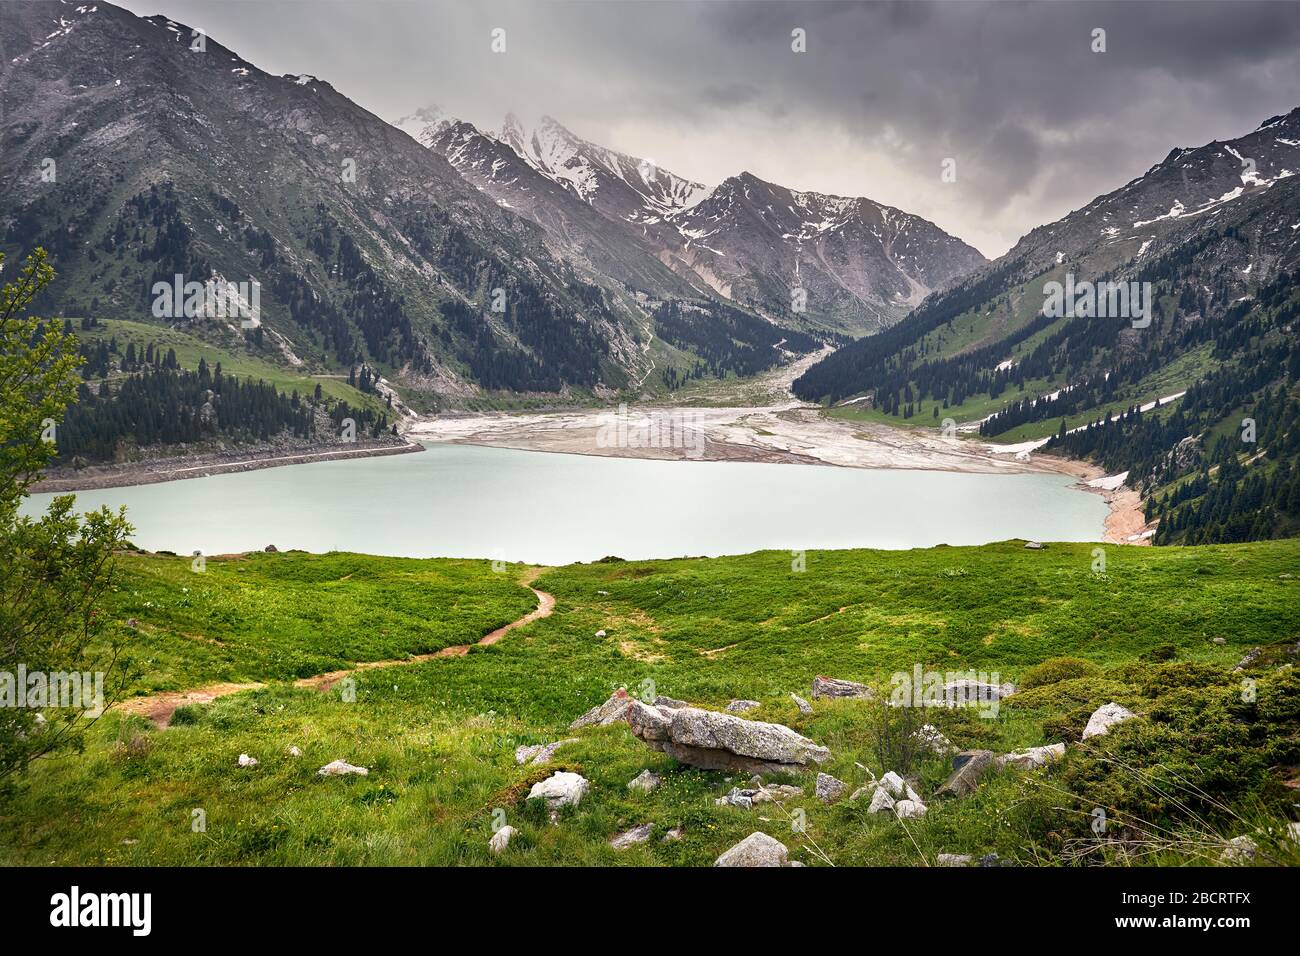 Hermoso paisaje de gran Lago de Almaty en las montañas de Tian Shan en Kazajstán Foto de stock